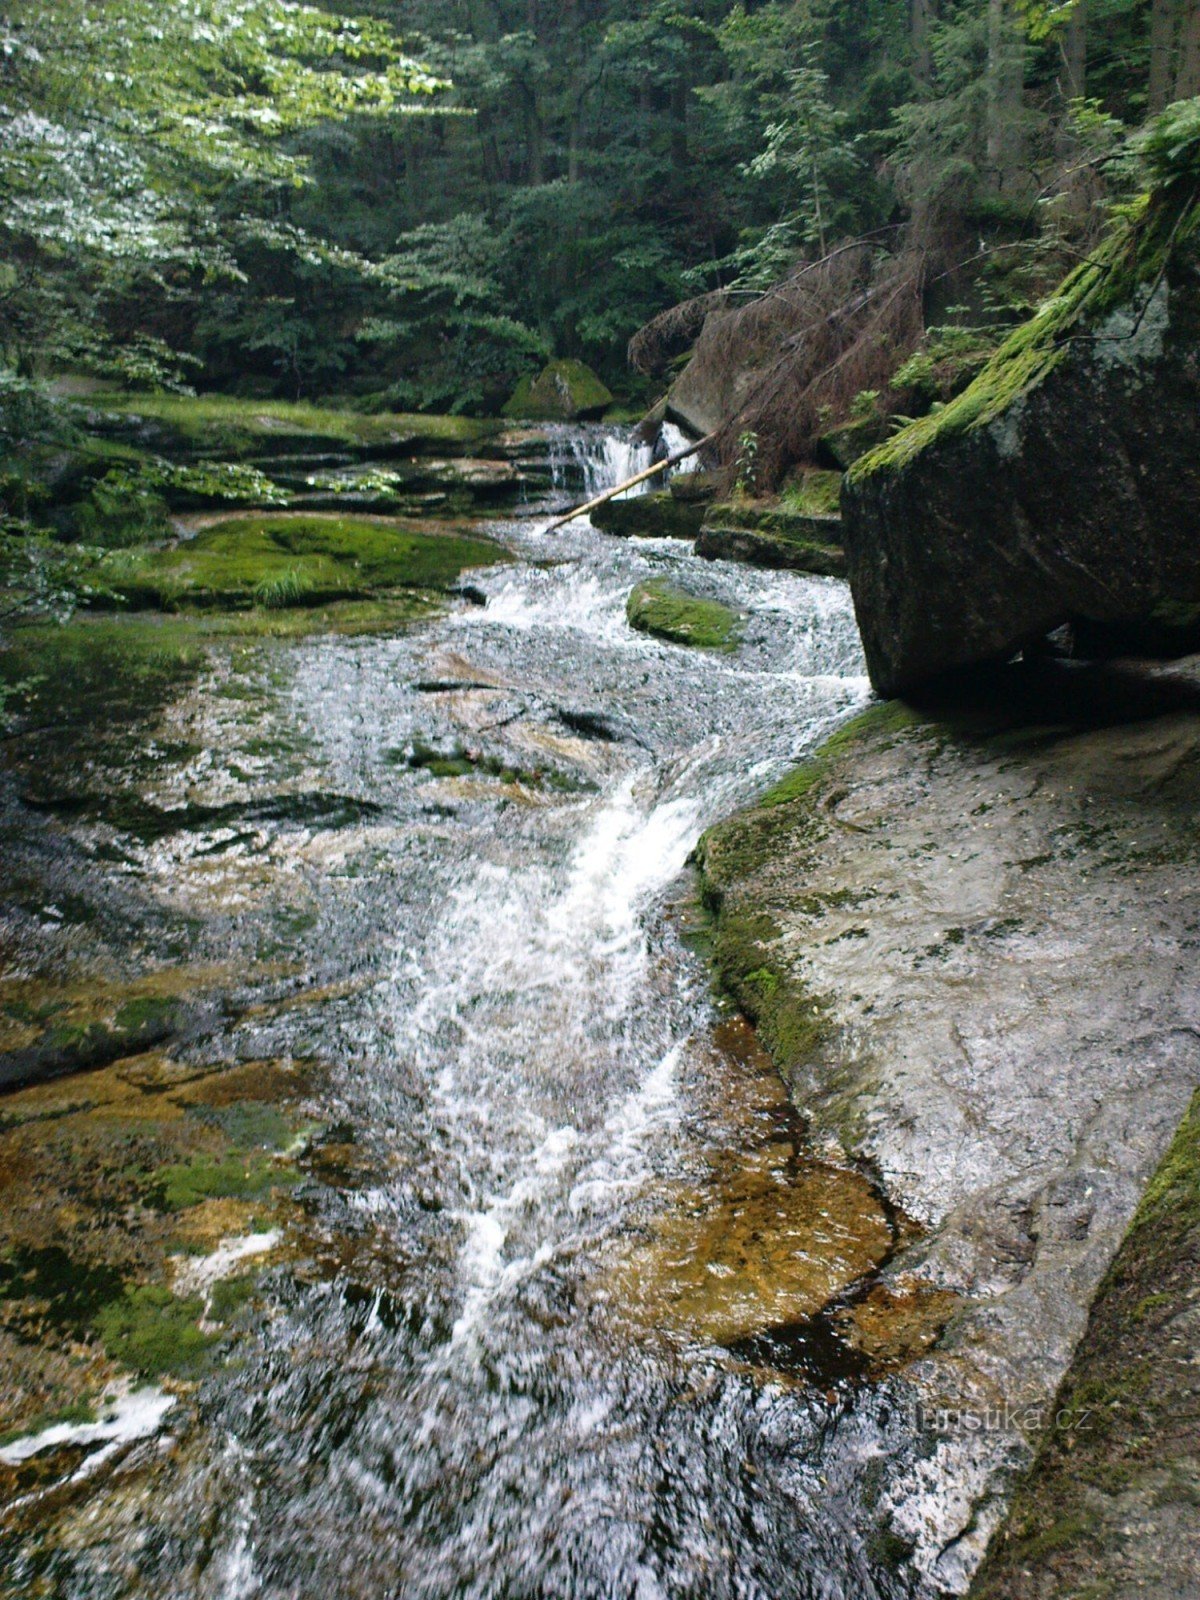 Jedlová-watervallen